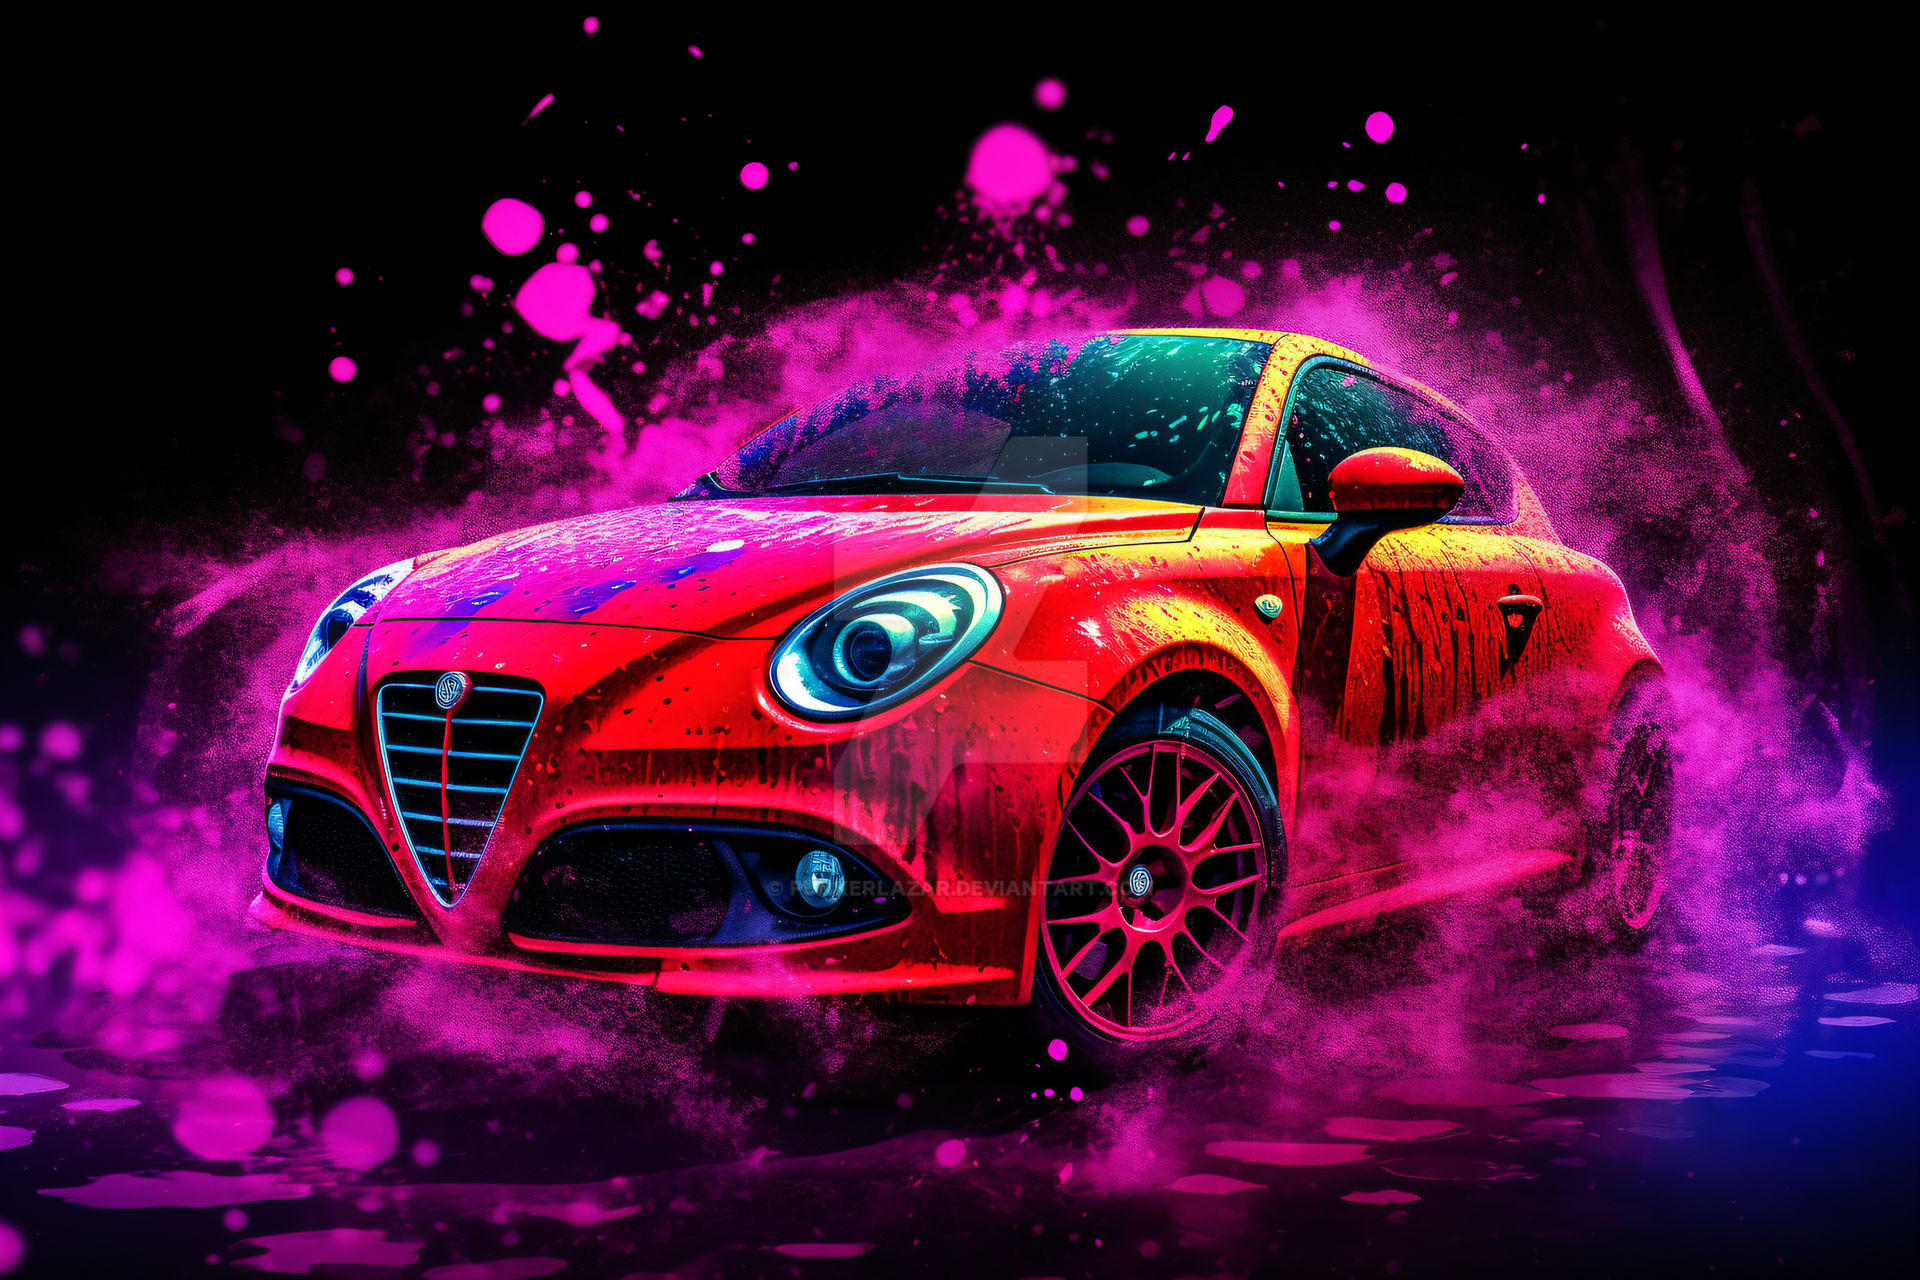 Alfa Romeo Mito Ink Artwork (4) by PunkerLazar on DeviantArt